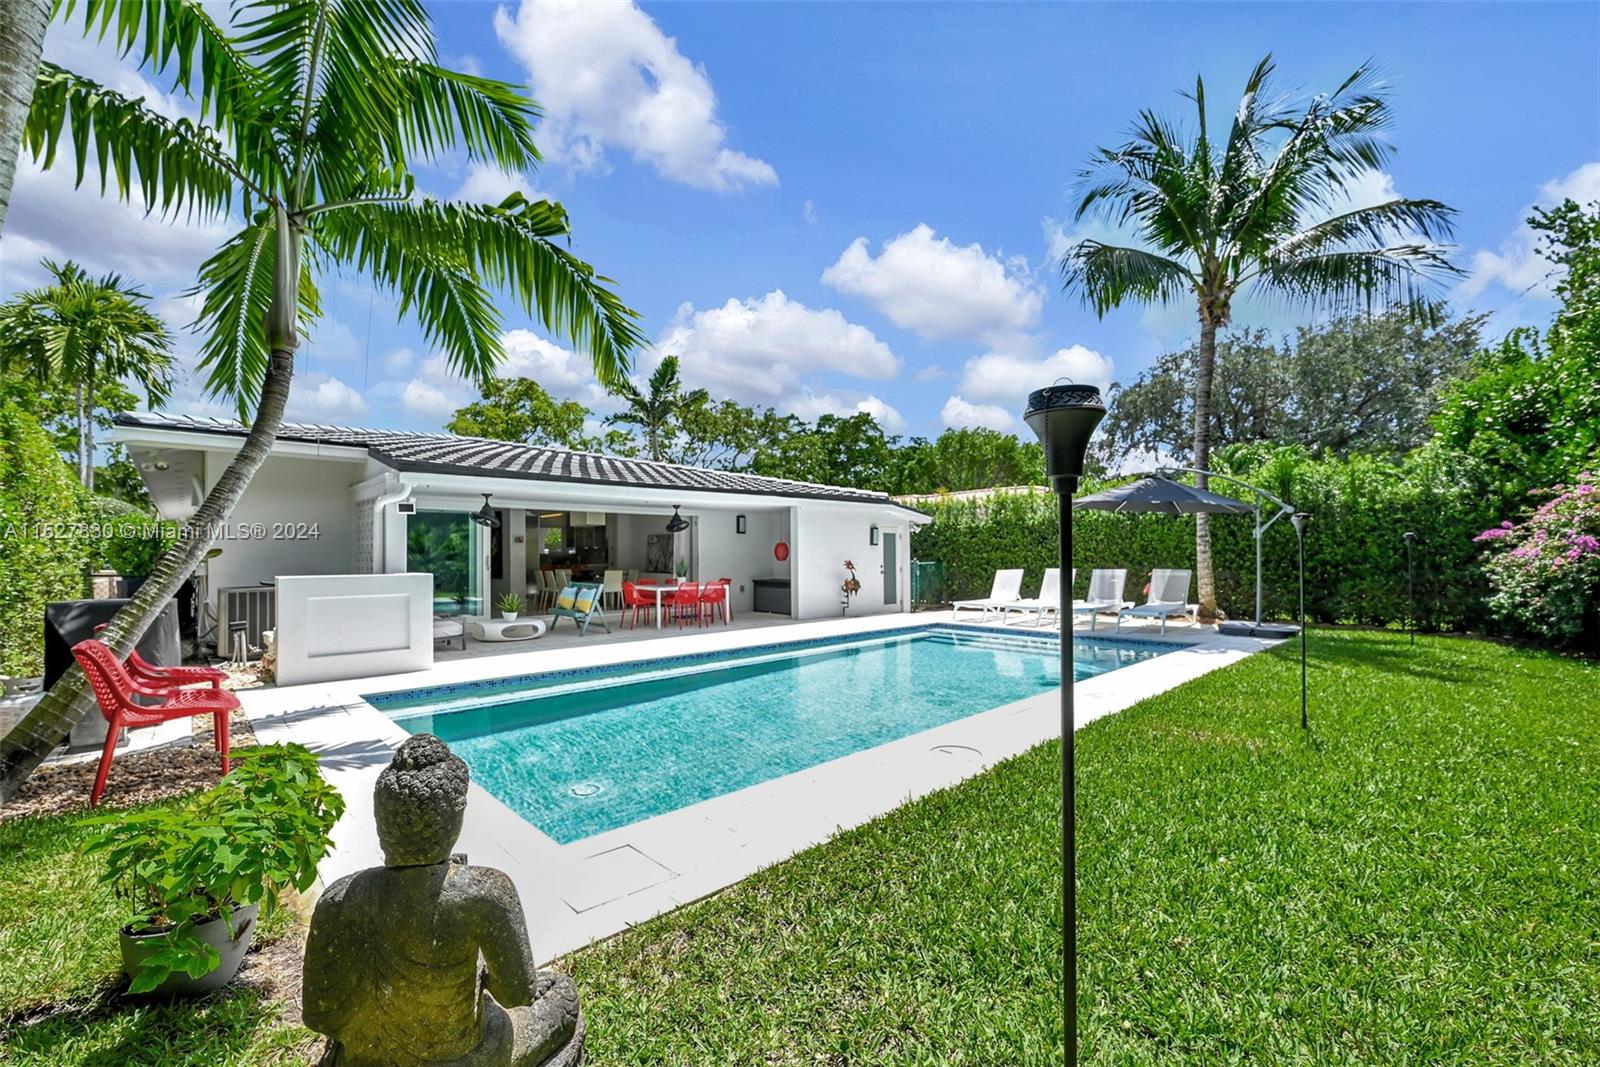 Property for Sale at 825 Malaga Ave, Coral Gables, Broward County, Florida - Bedrooms: 3 
Bathrooms: 3  - $1,995,000